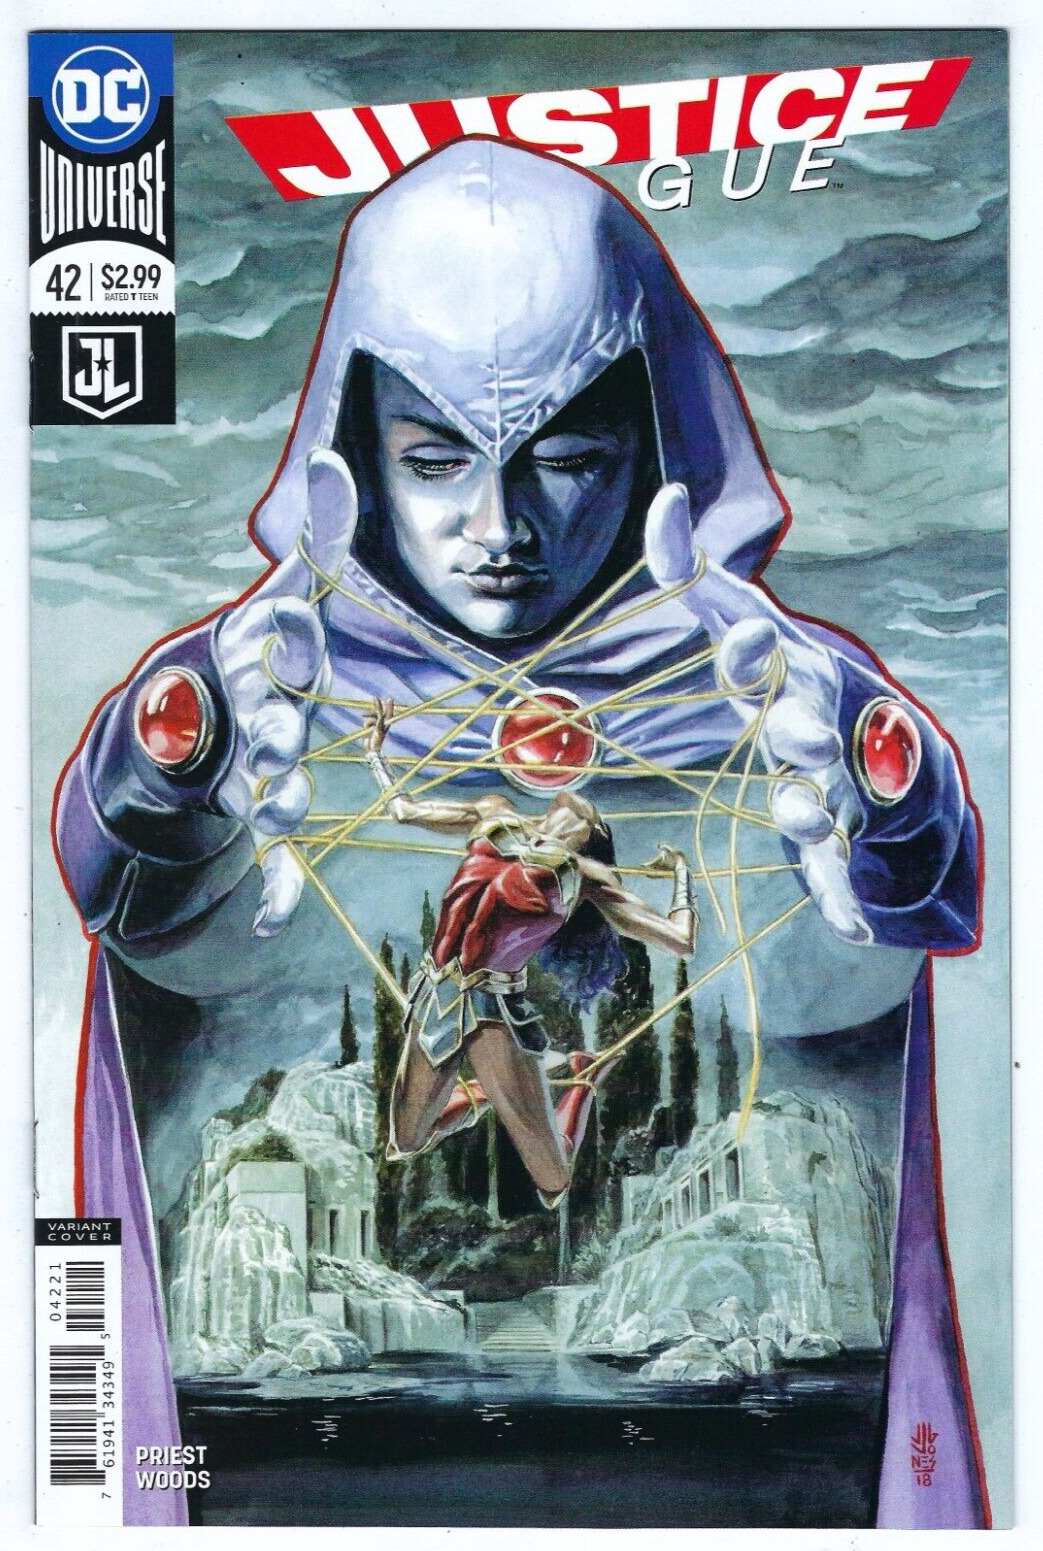 DC Comics JUSTICE LEAGUE #42 first printing JG Jones cover B variant